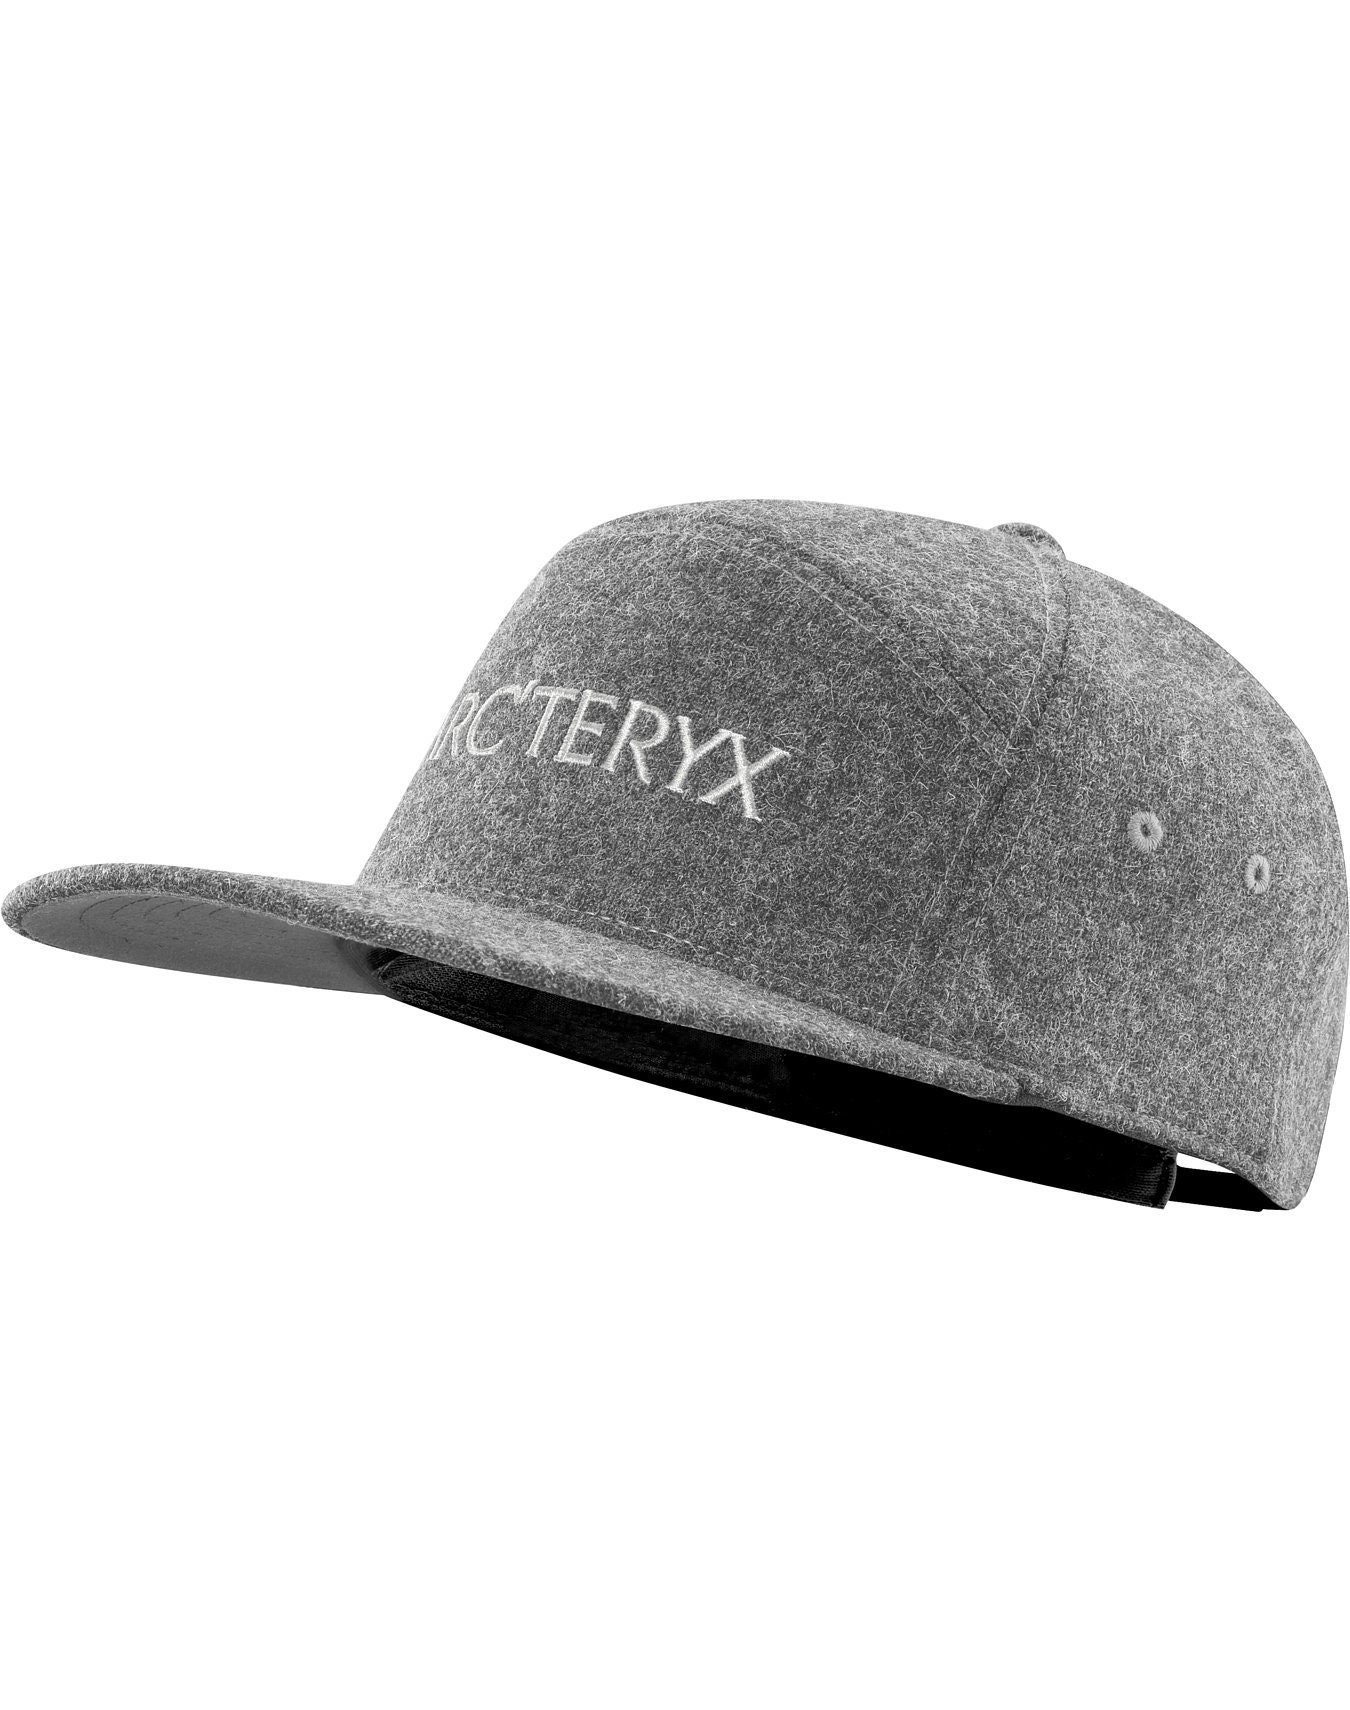 Arc'Teryx 7 Panel Wool Ball Cap - Maine Bike Shop - Gorham Bike & Ski